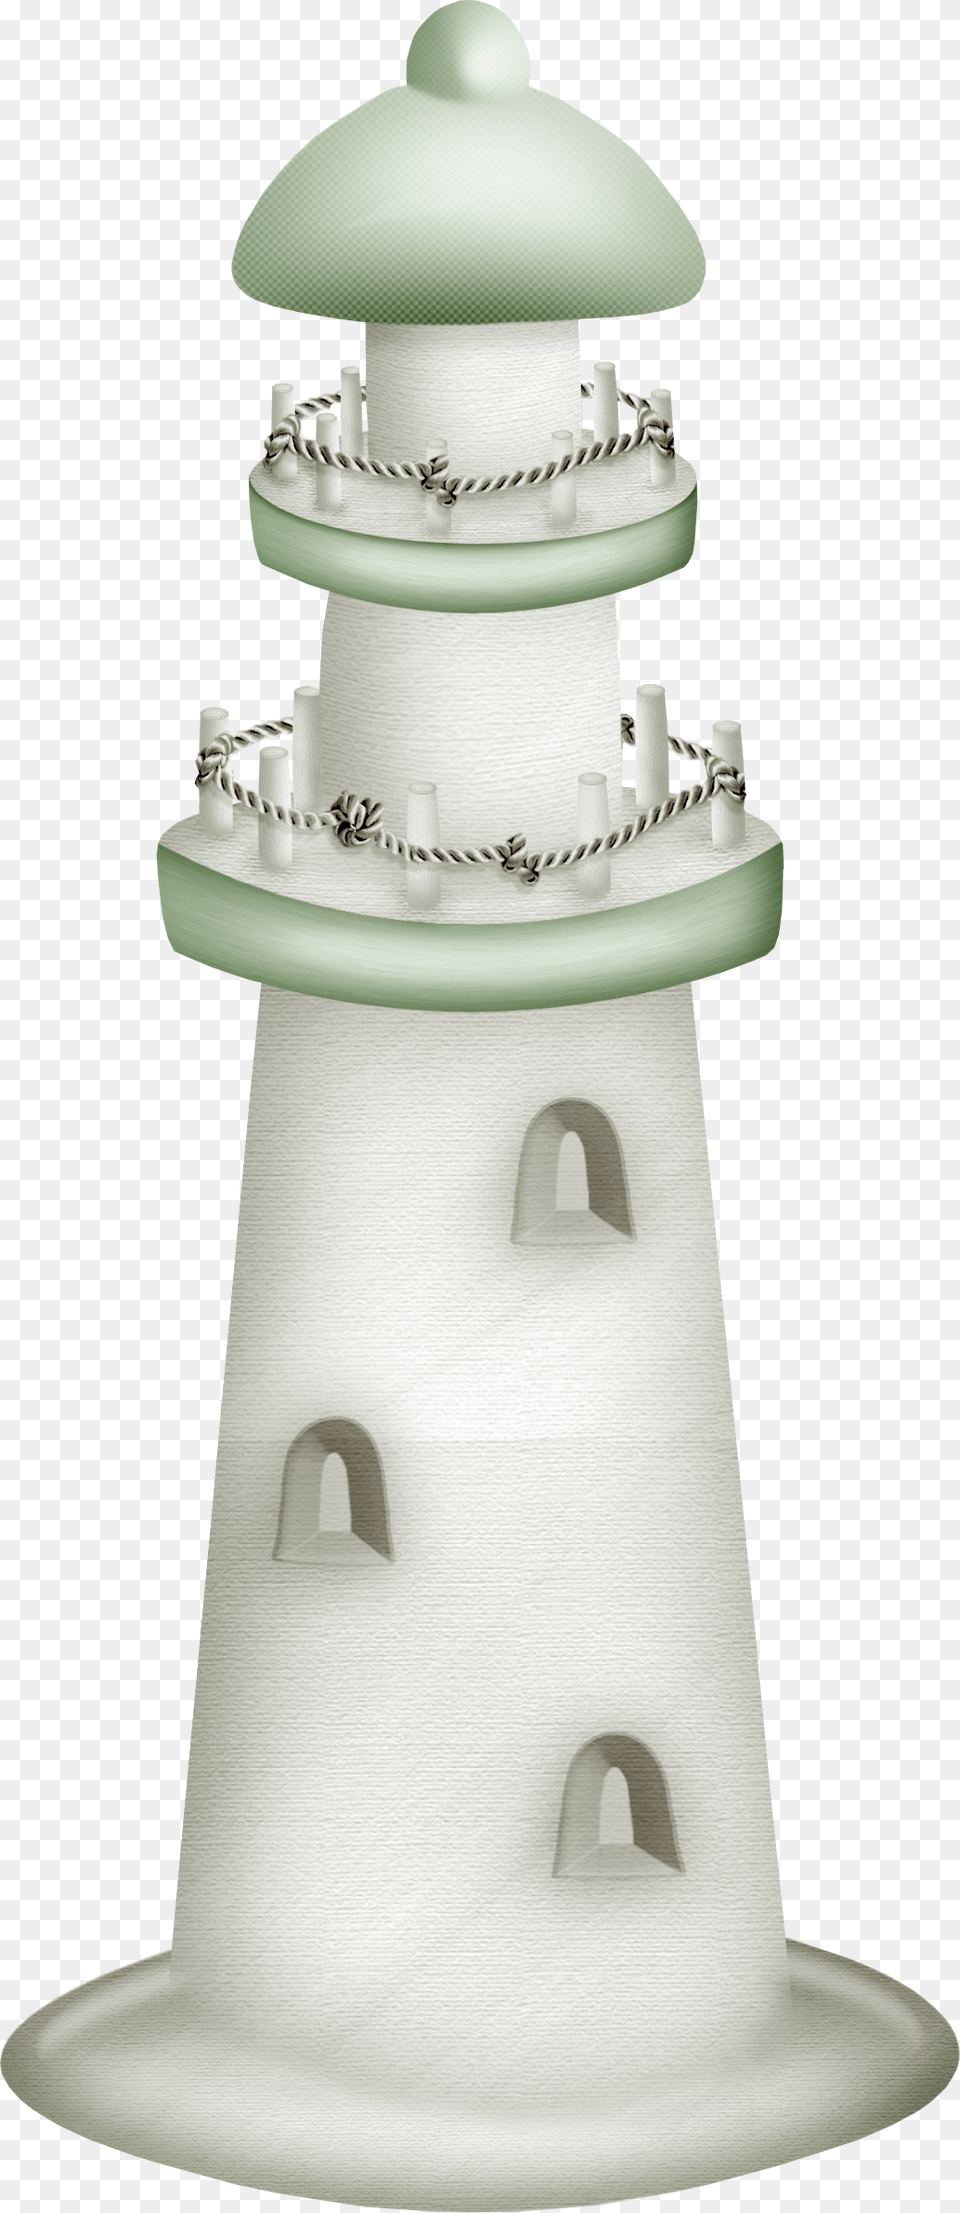 Lighthouse, Cake, Dessert, Food, Wedding Png Image